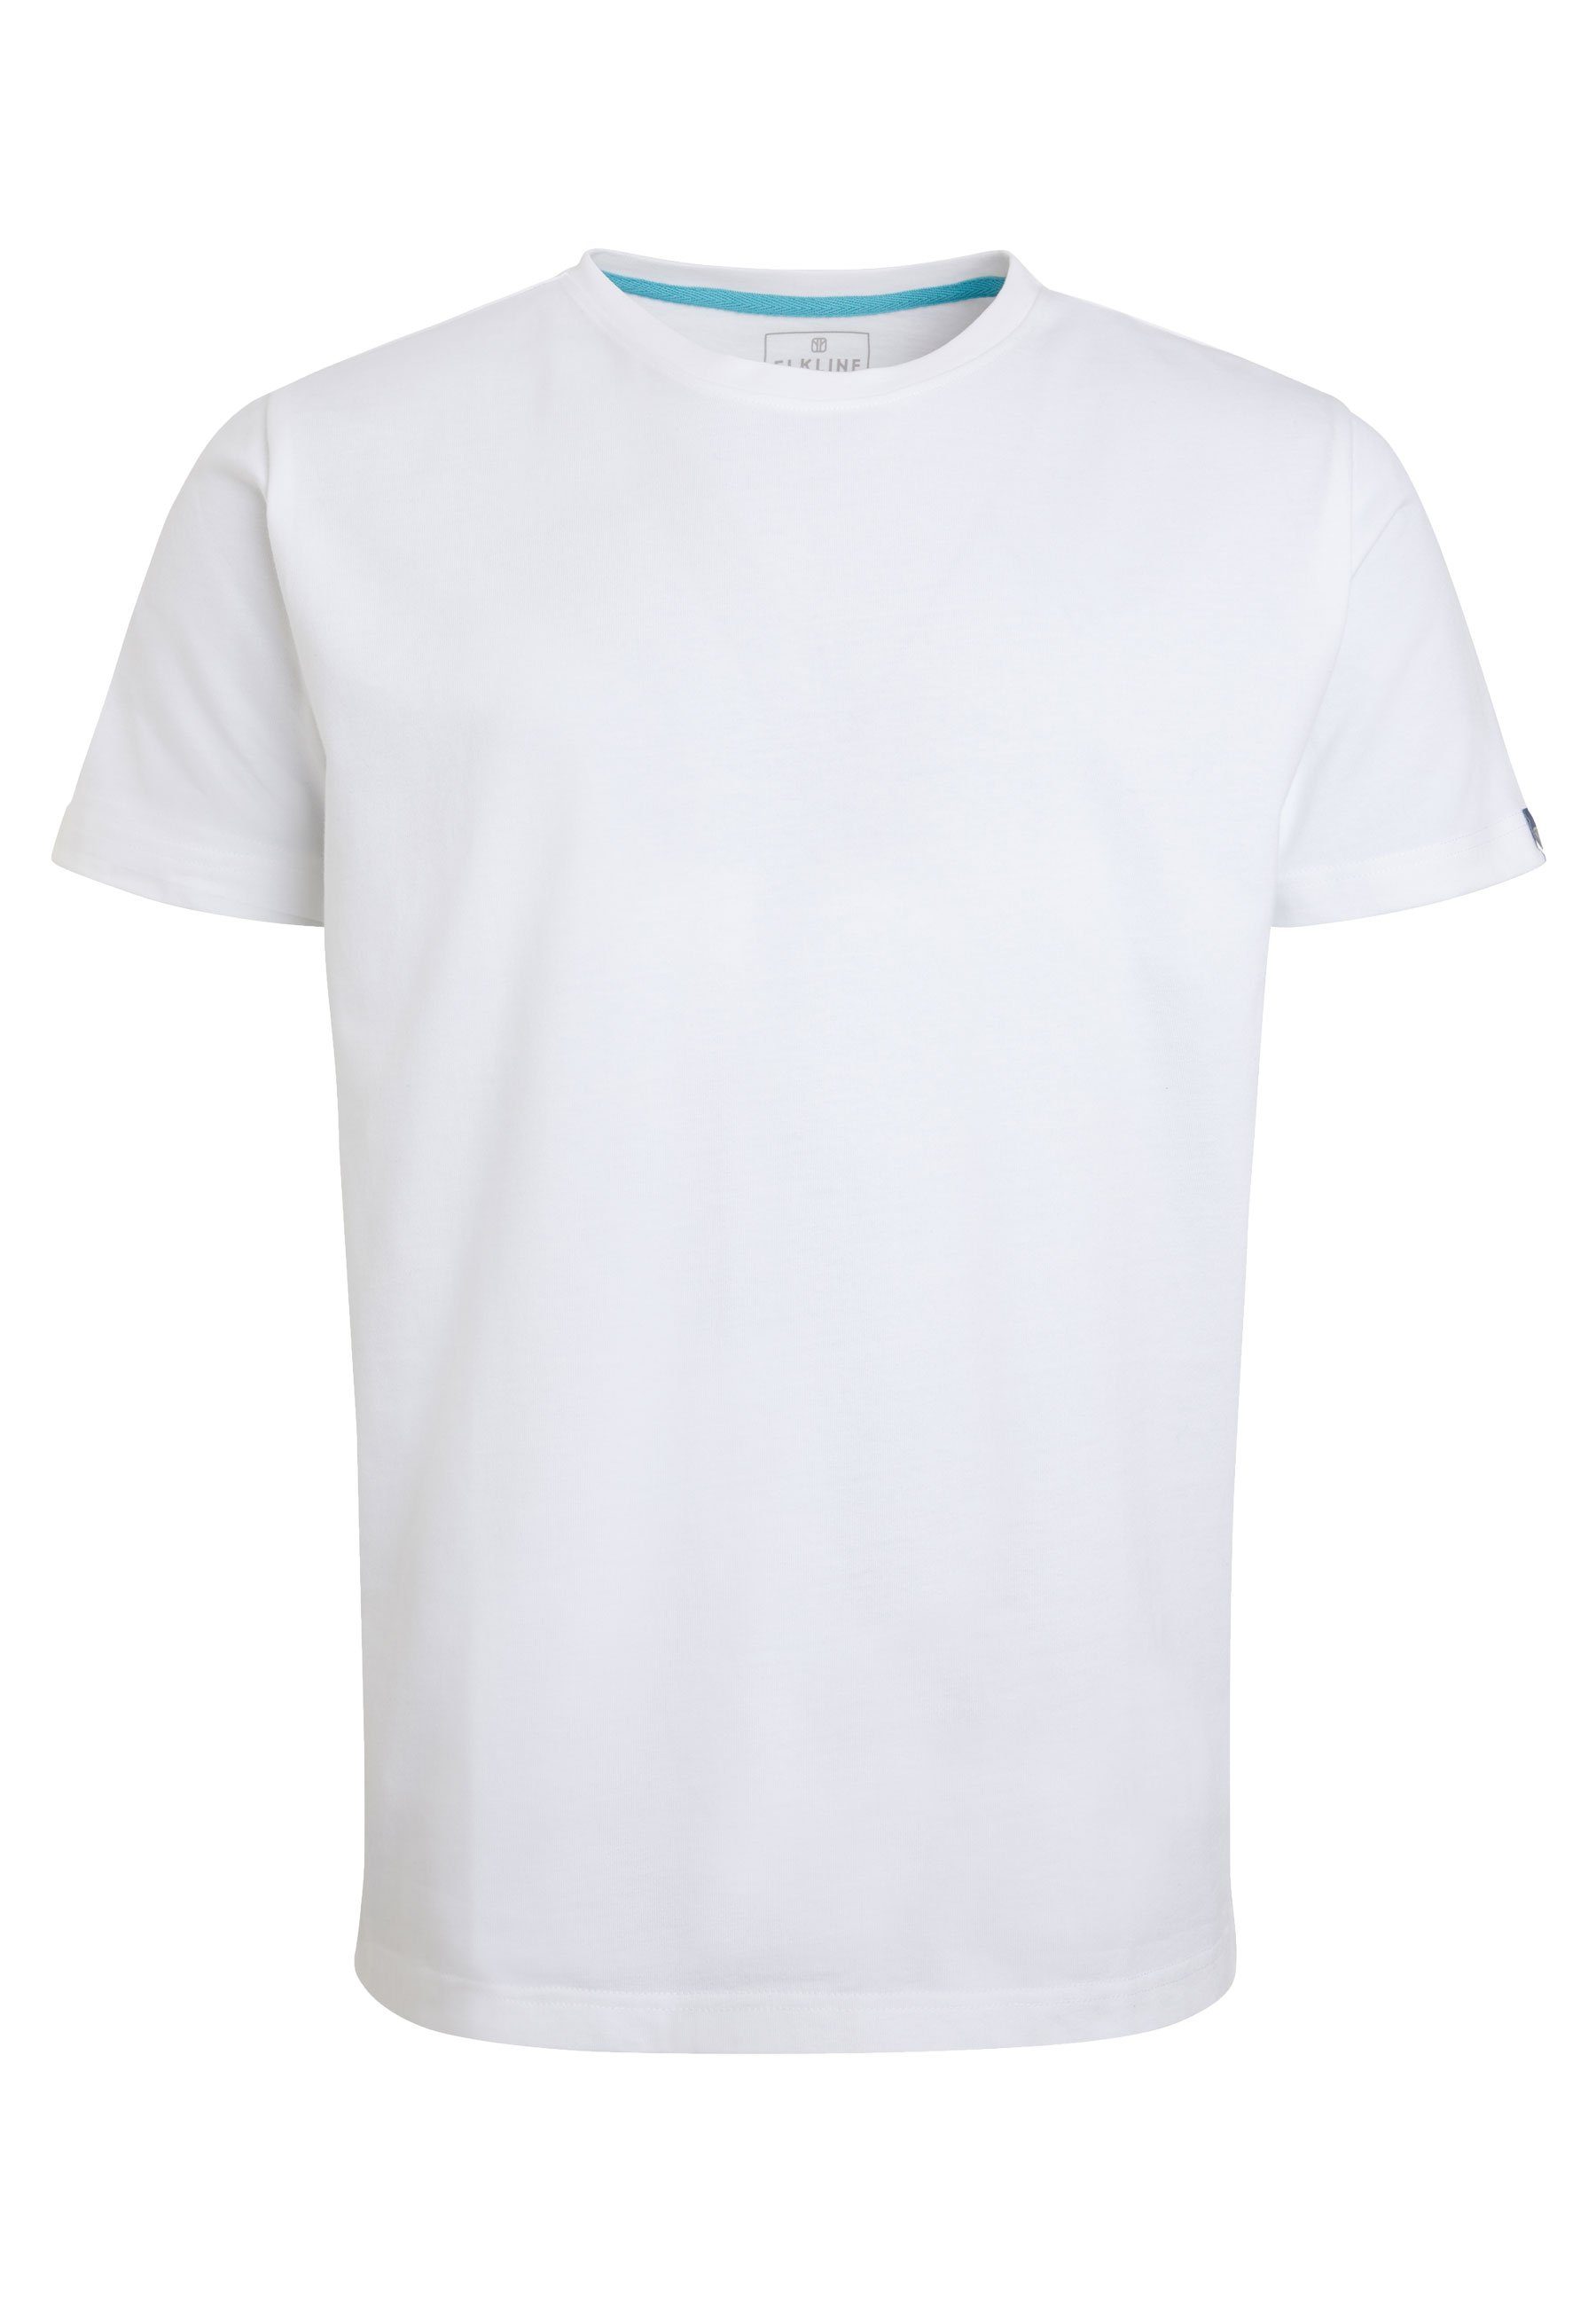 Elkline T-Shirt Must Have Basic Uni-Farben Shirt white